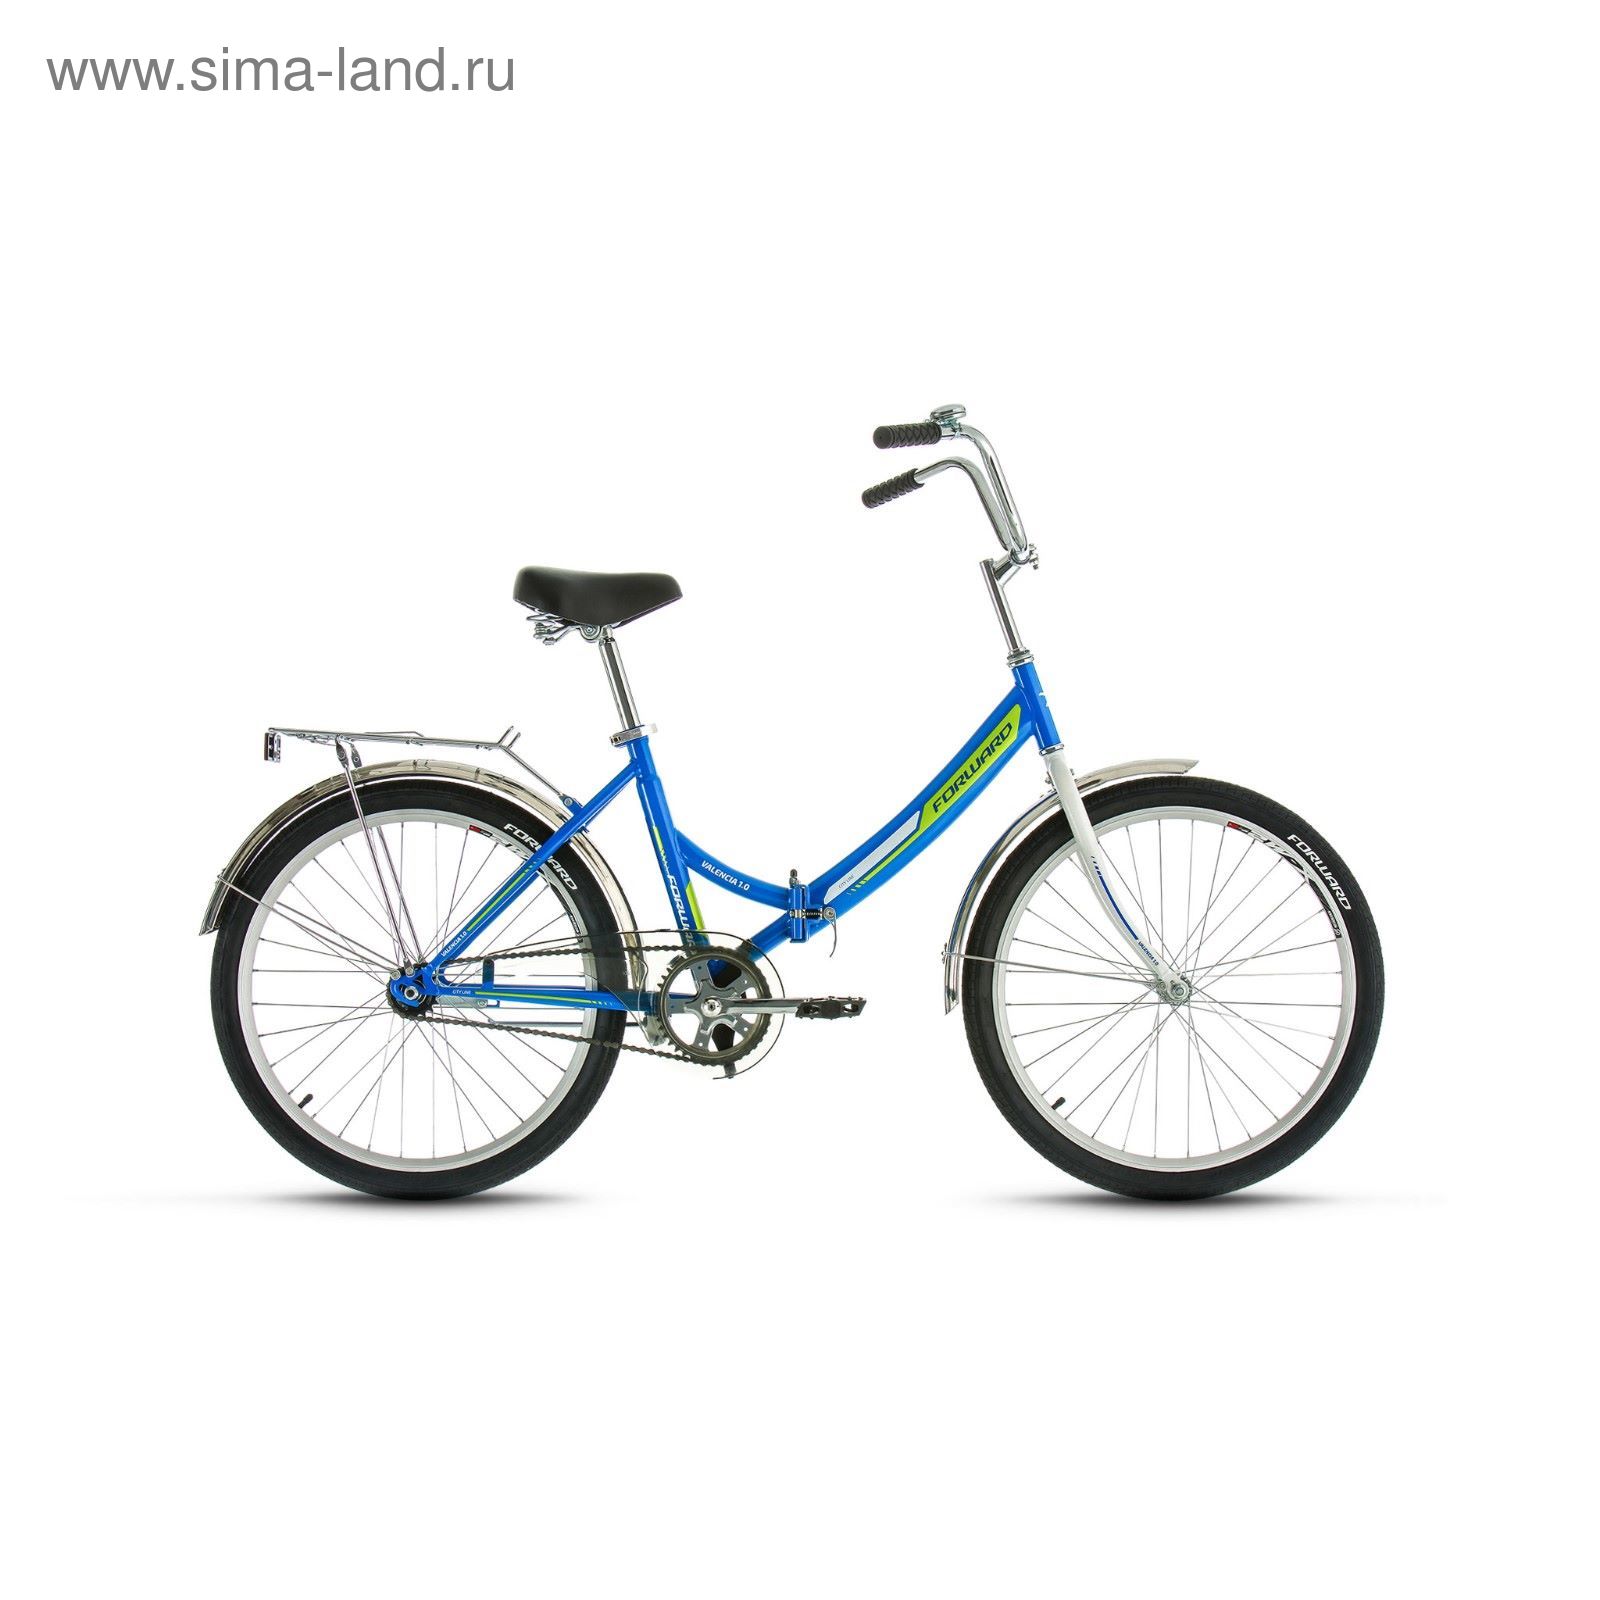 Велосипед 24" Forward Valencia 1.0, 2017, цвет синий, размер 16"